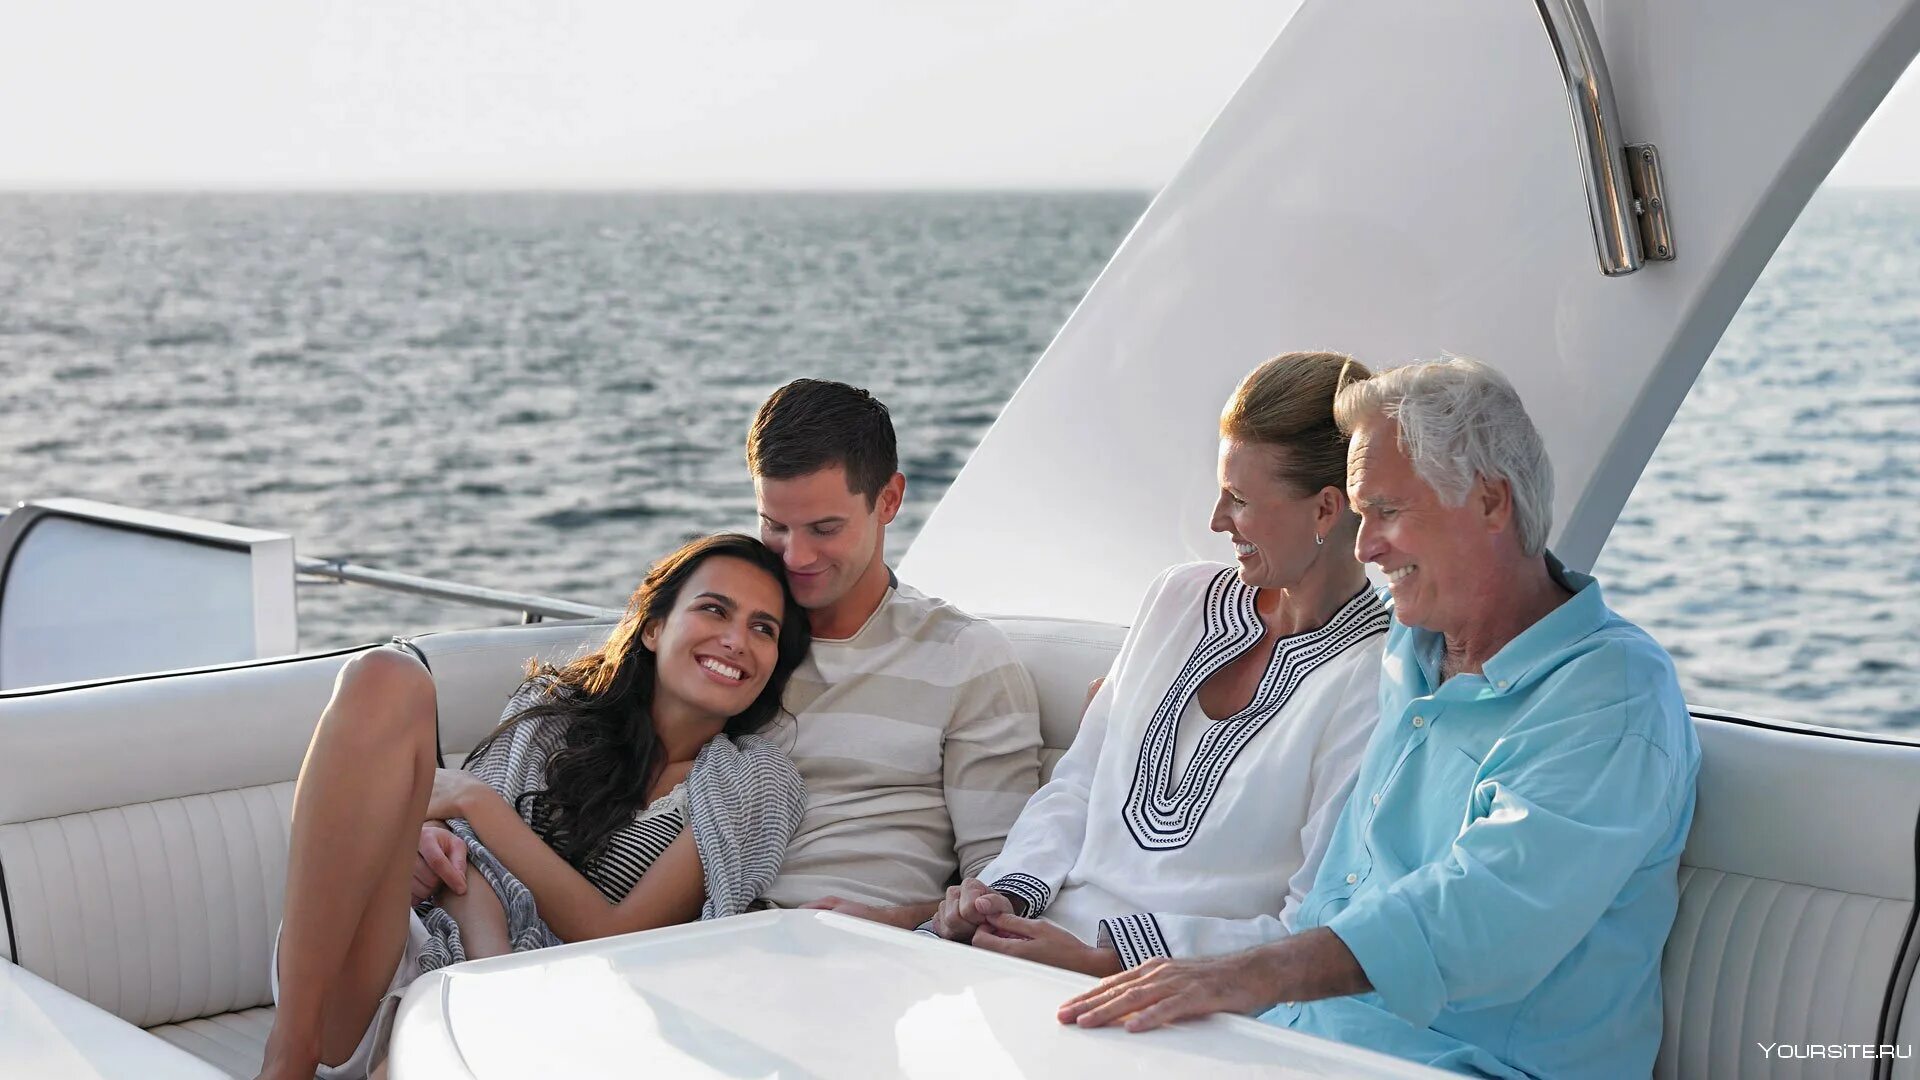 Самое богатое сообщество. Семья на яхте. Женщина на яхте. Яхта фото. Фотосессия на яхте семья.